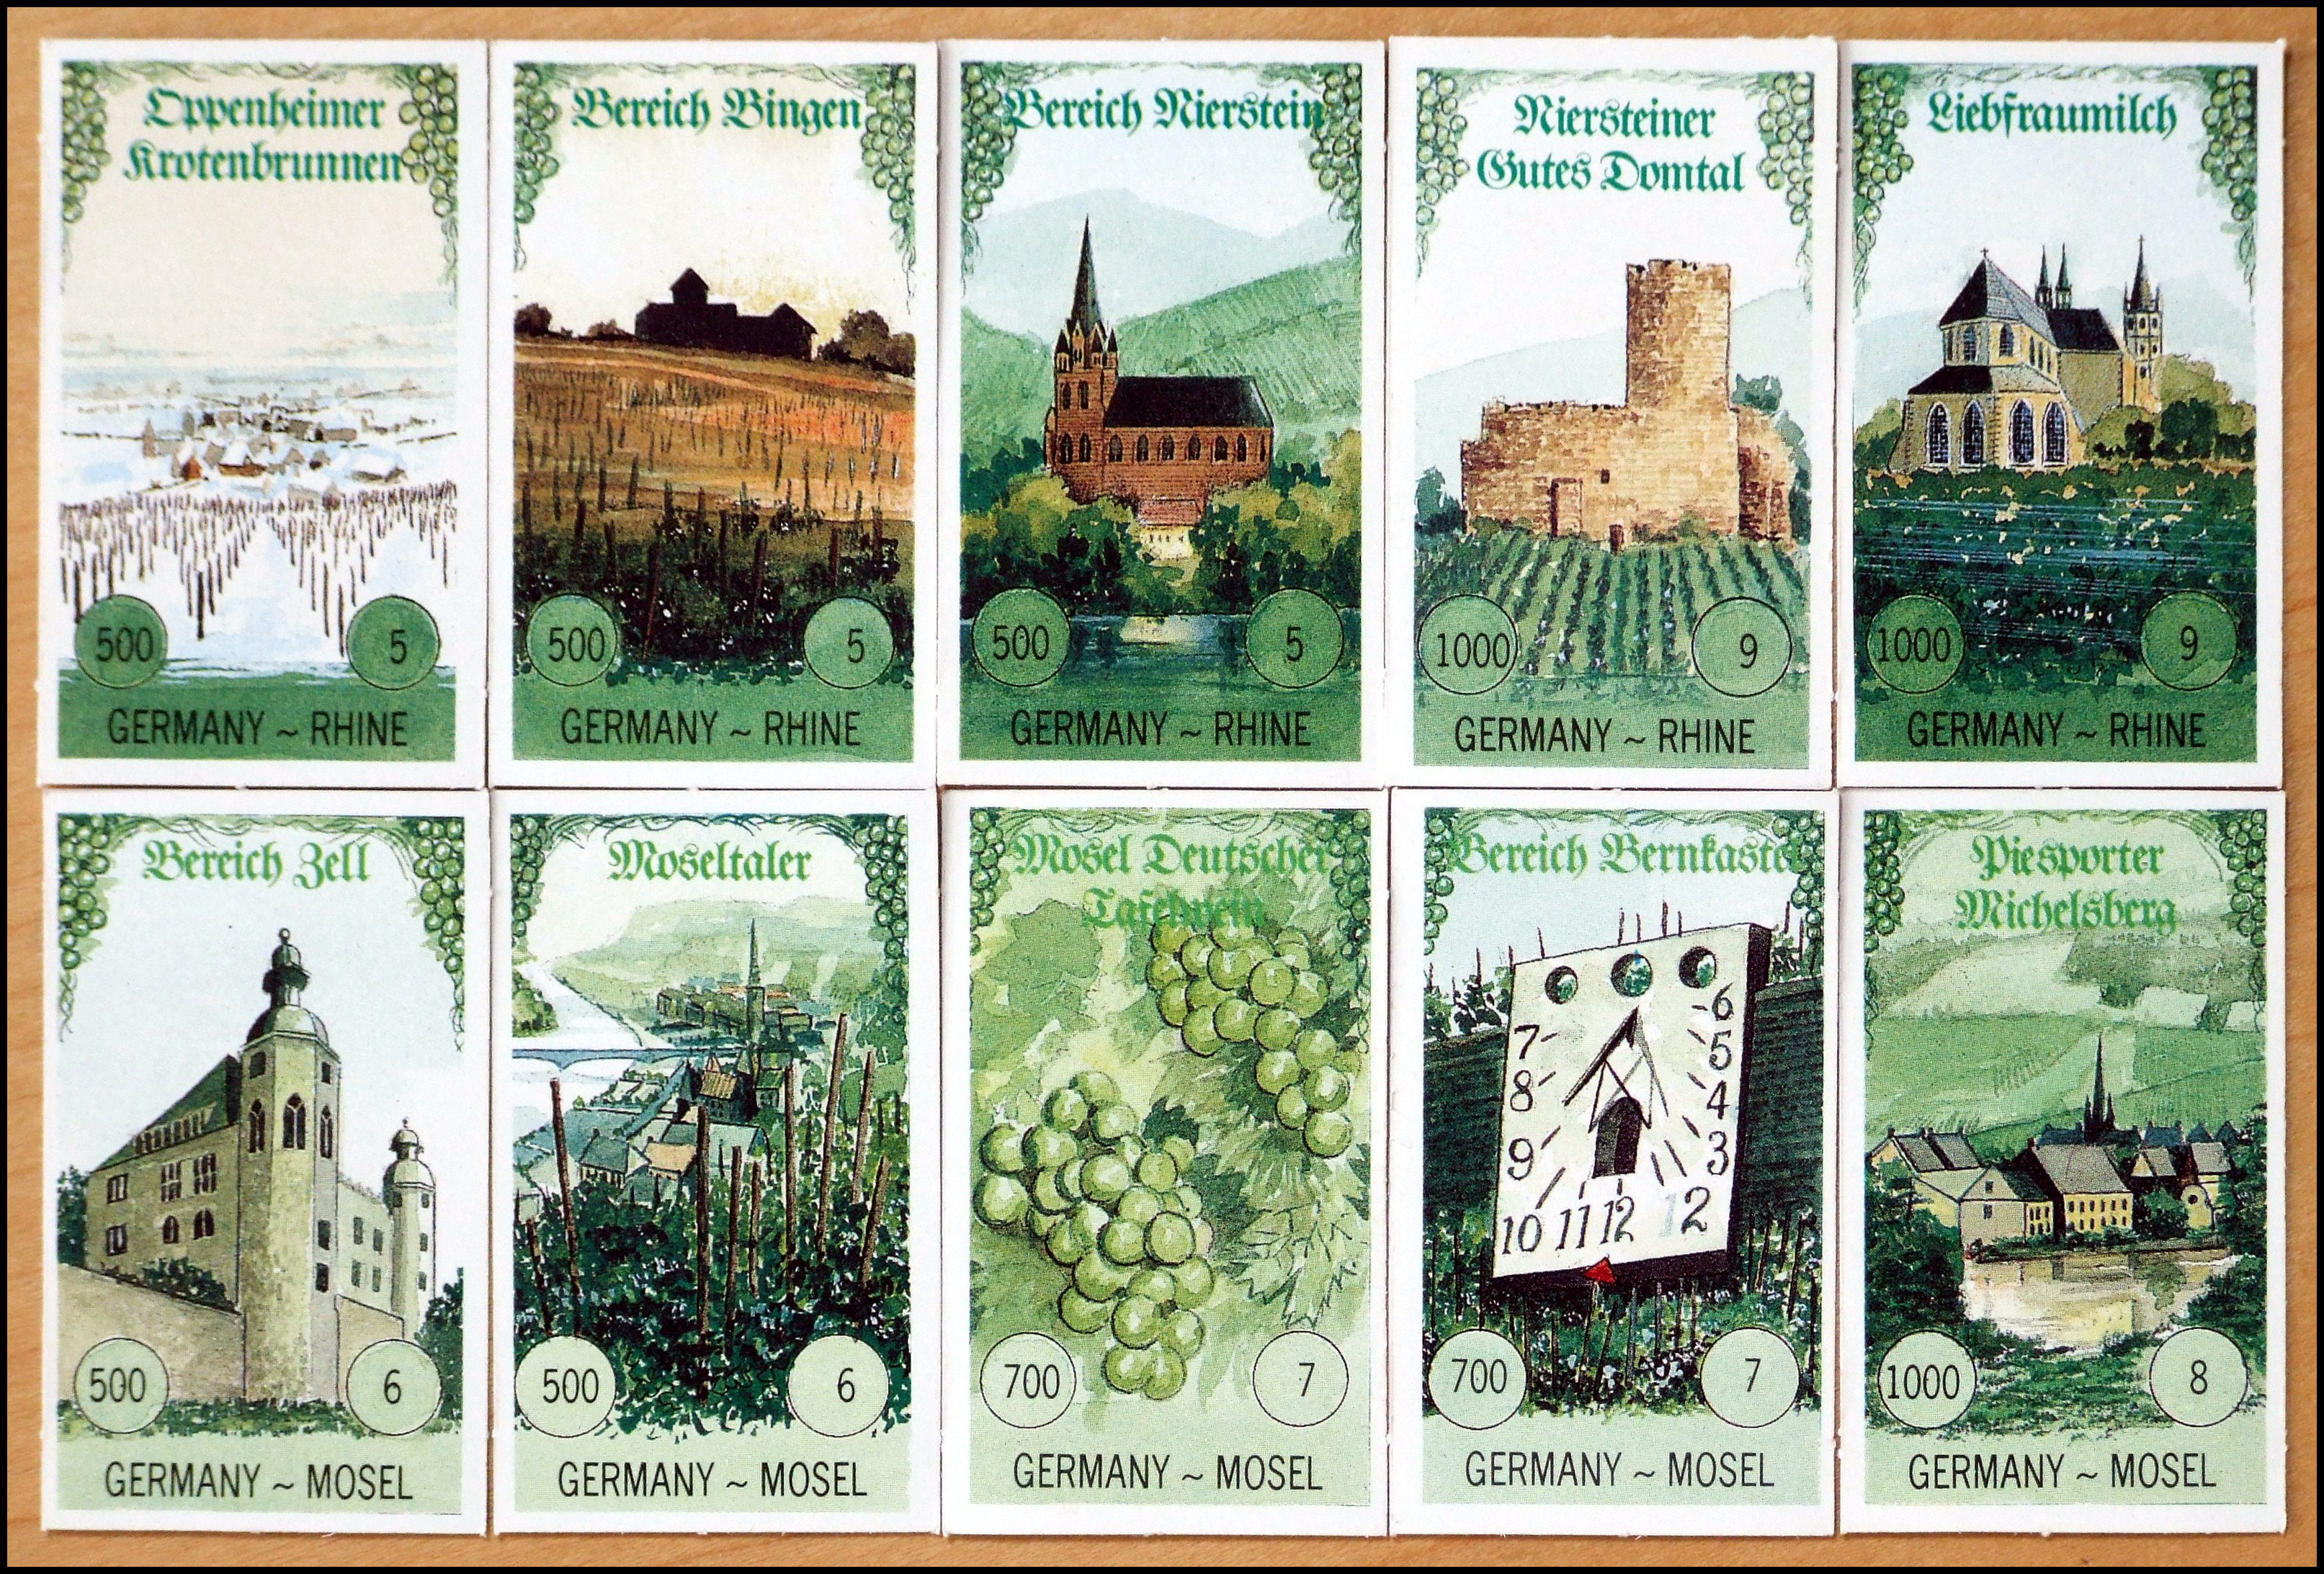 Grapevine - German Wine Cards